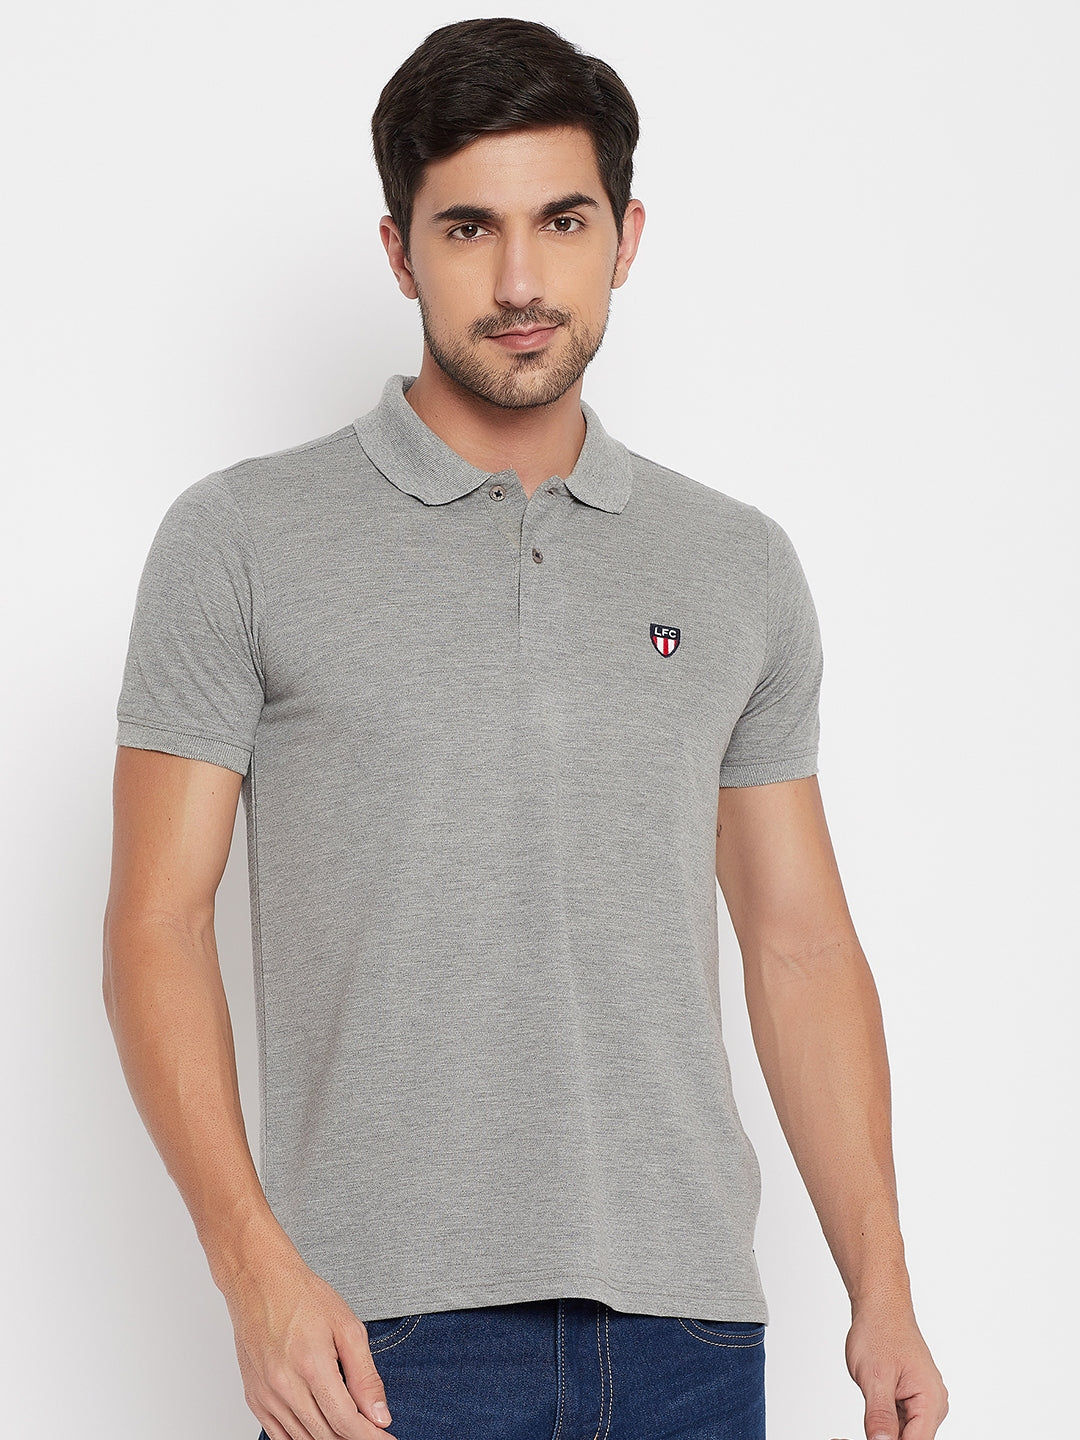 LIVFREE  Men's Regular Fit Solid T-Shirt -15%Milange Grey